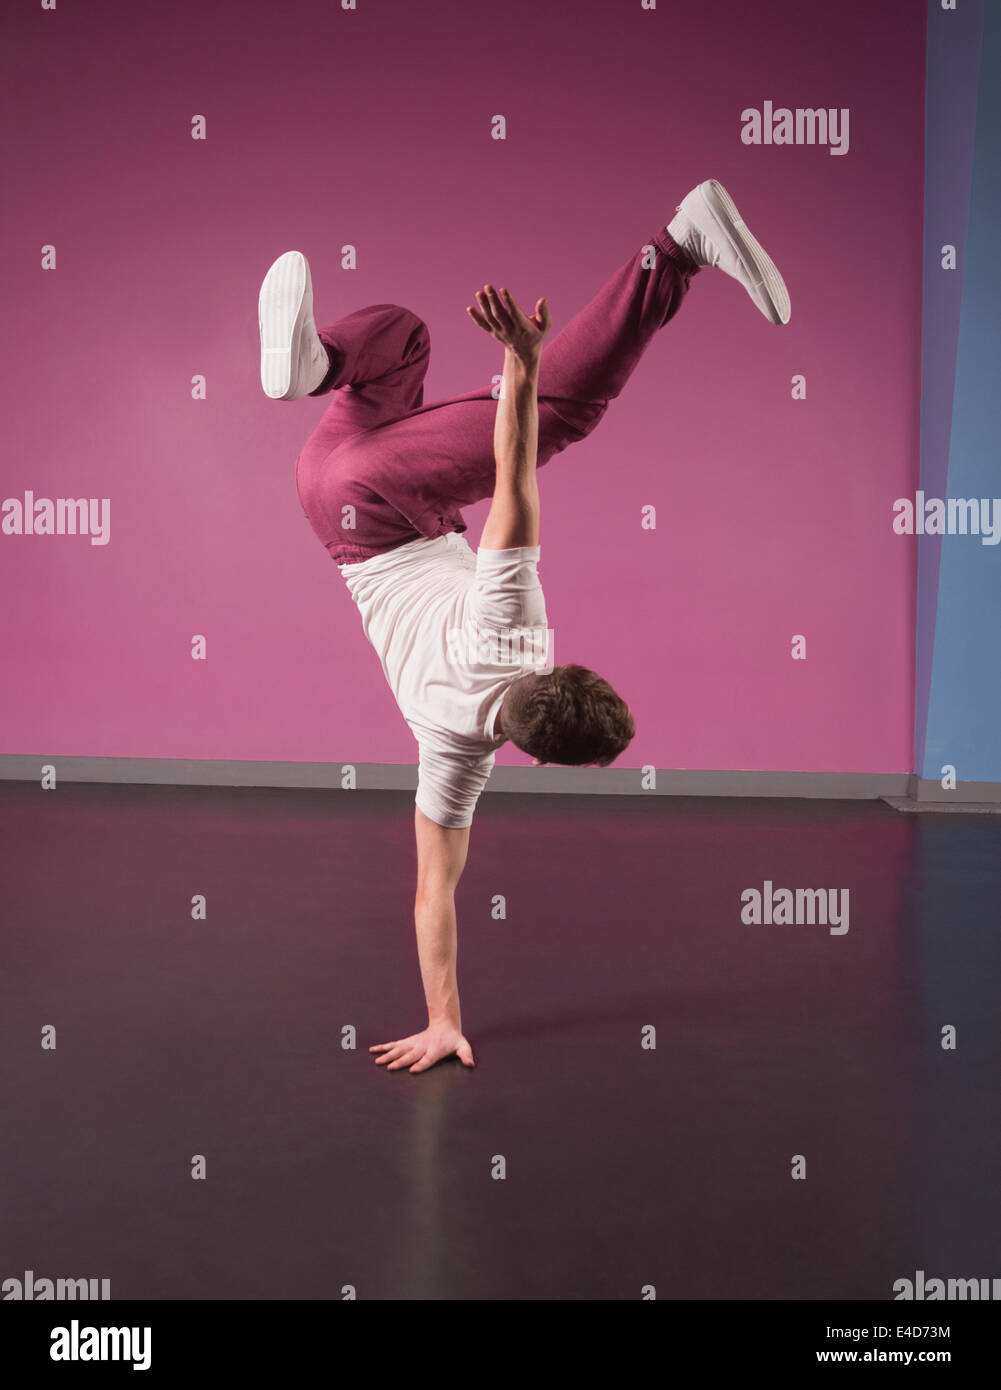 Cool break dancer doing handstand on one hand Stock Photo